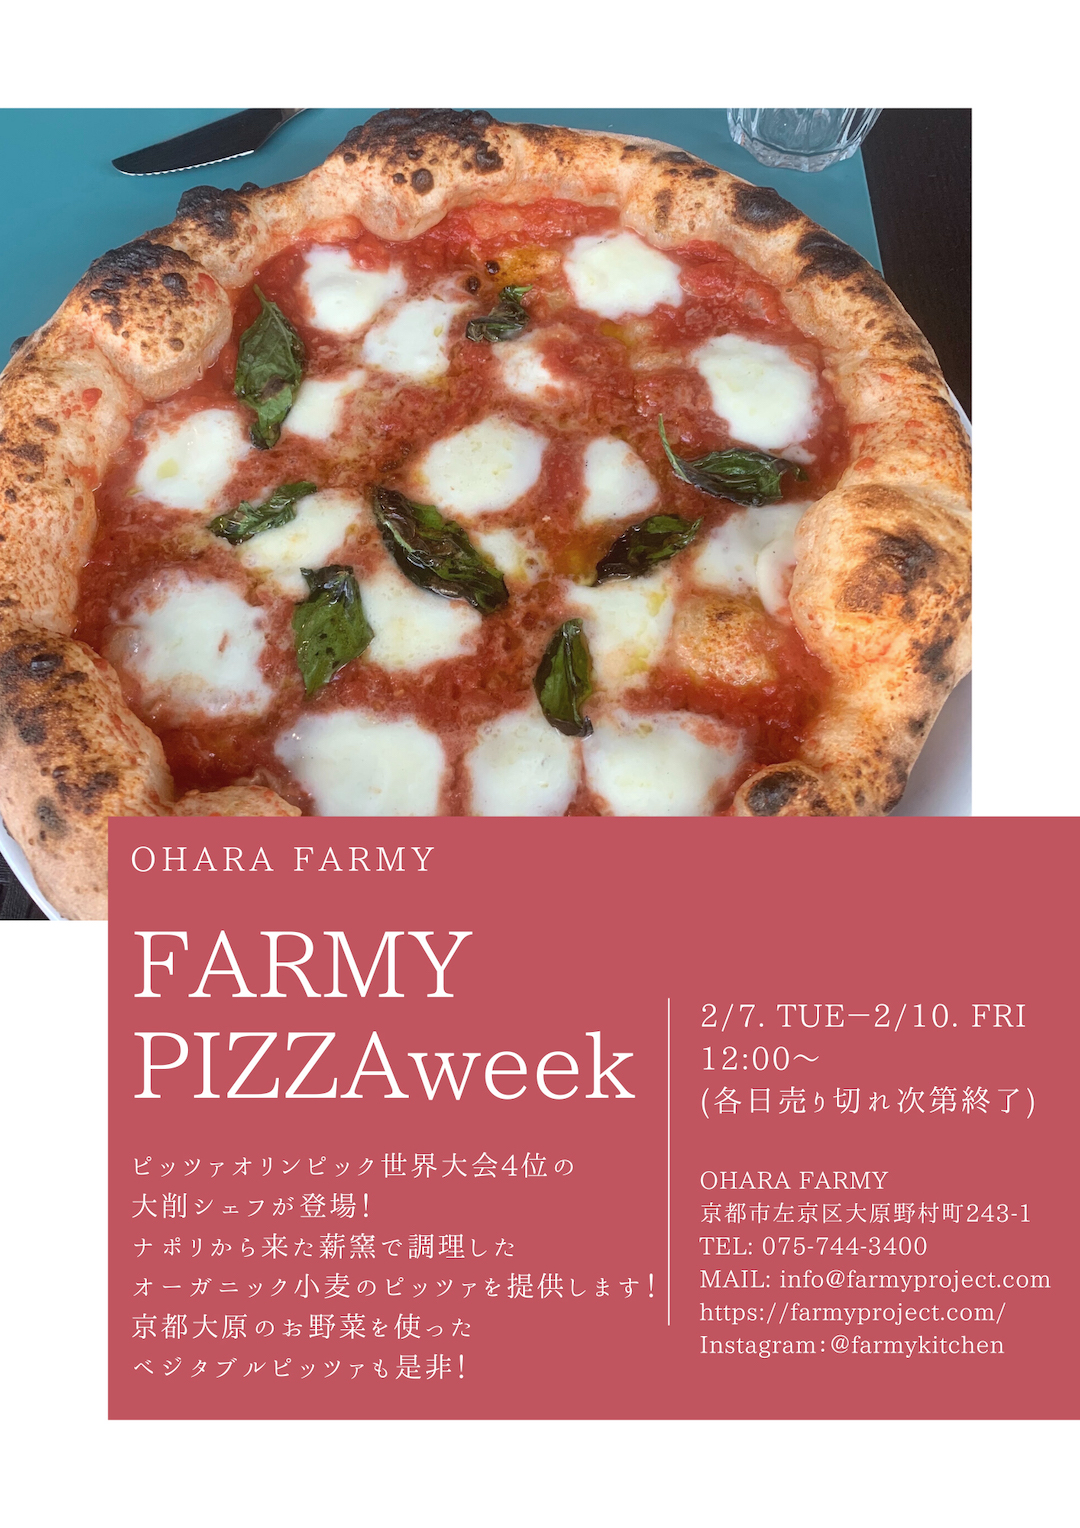 2/7〜2/10【FARMY PIZZA week】ファーミー・ピッツァ・ウィーク